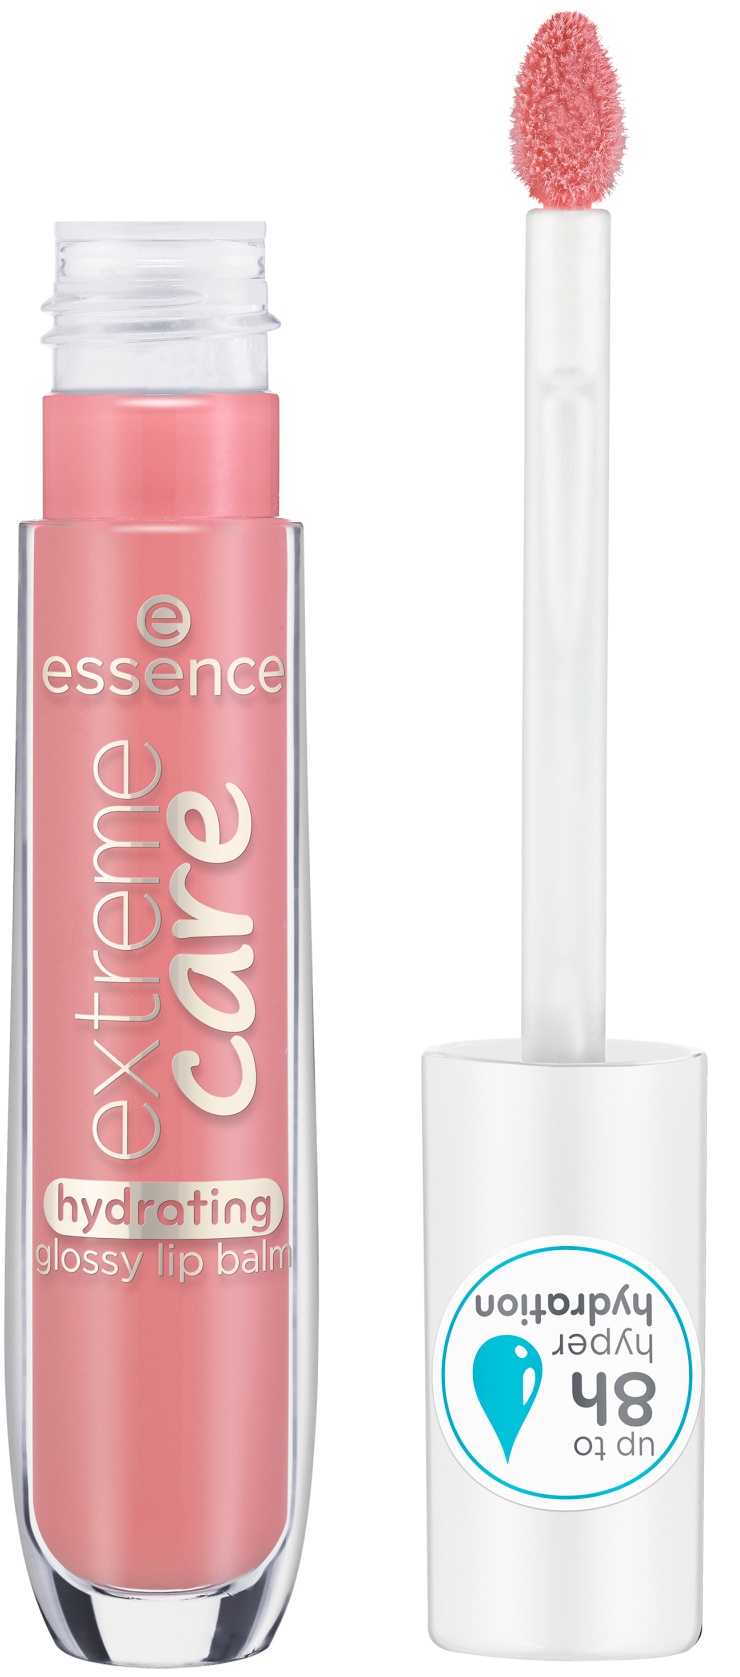 Essence Extreme Care Hydrating Glossy Lip Balm - 02 Soft Peach